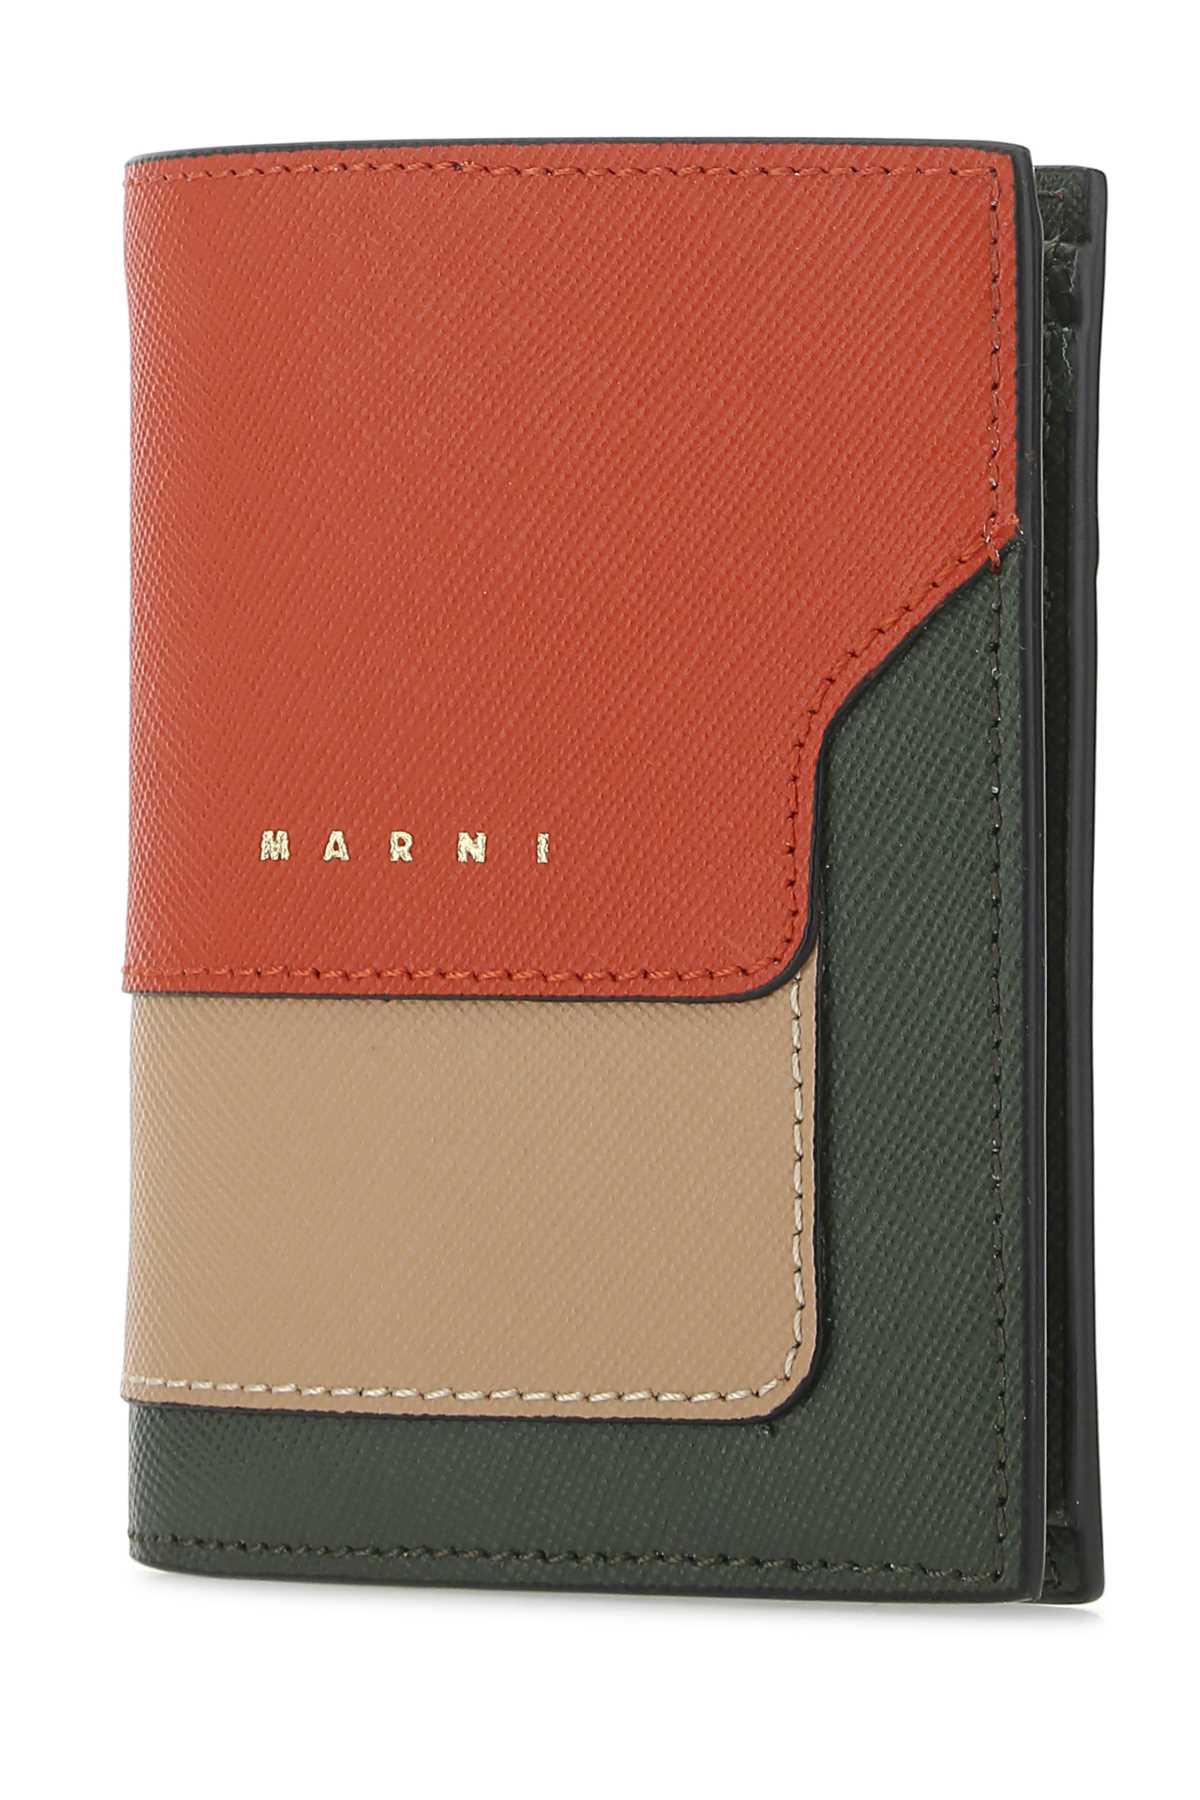 Marni Multicolor Leather Wallet In Z585n